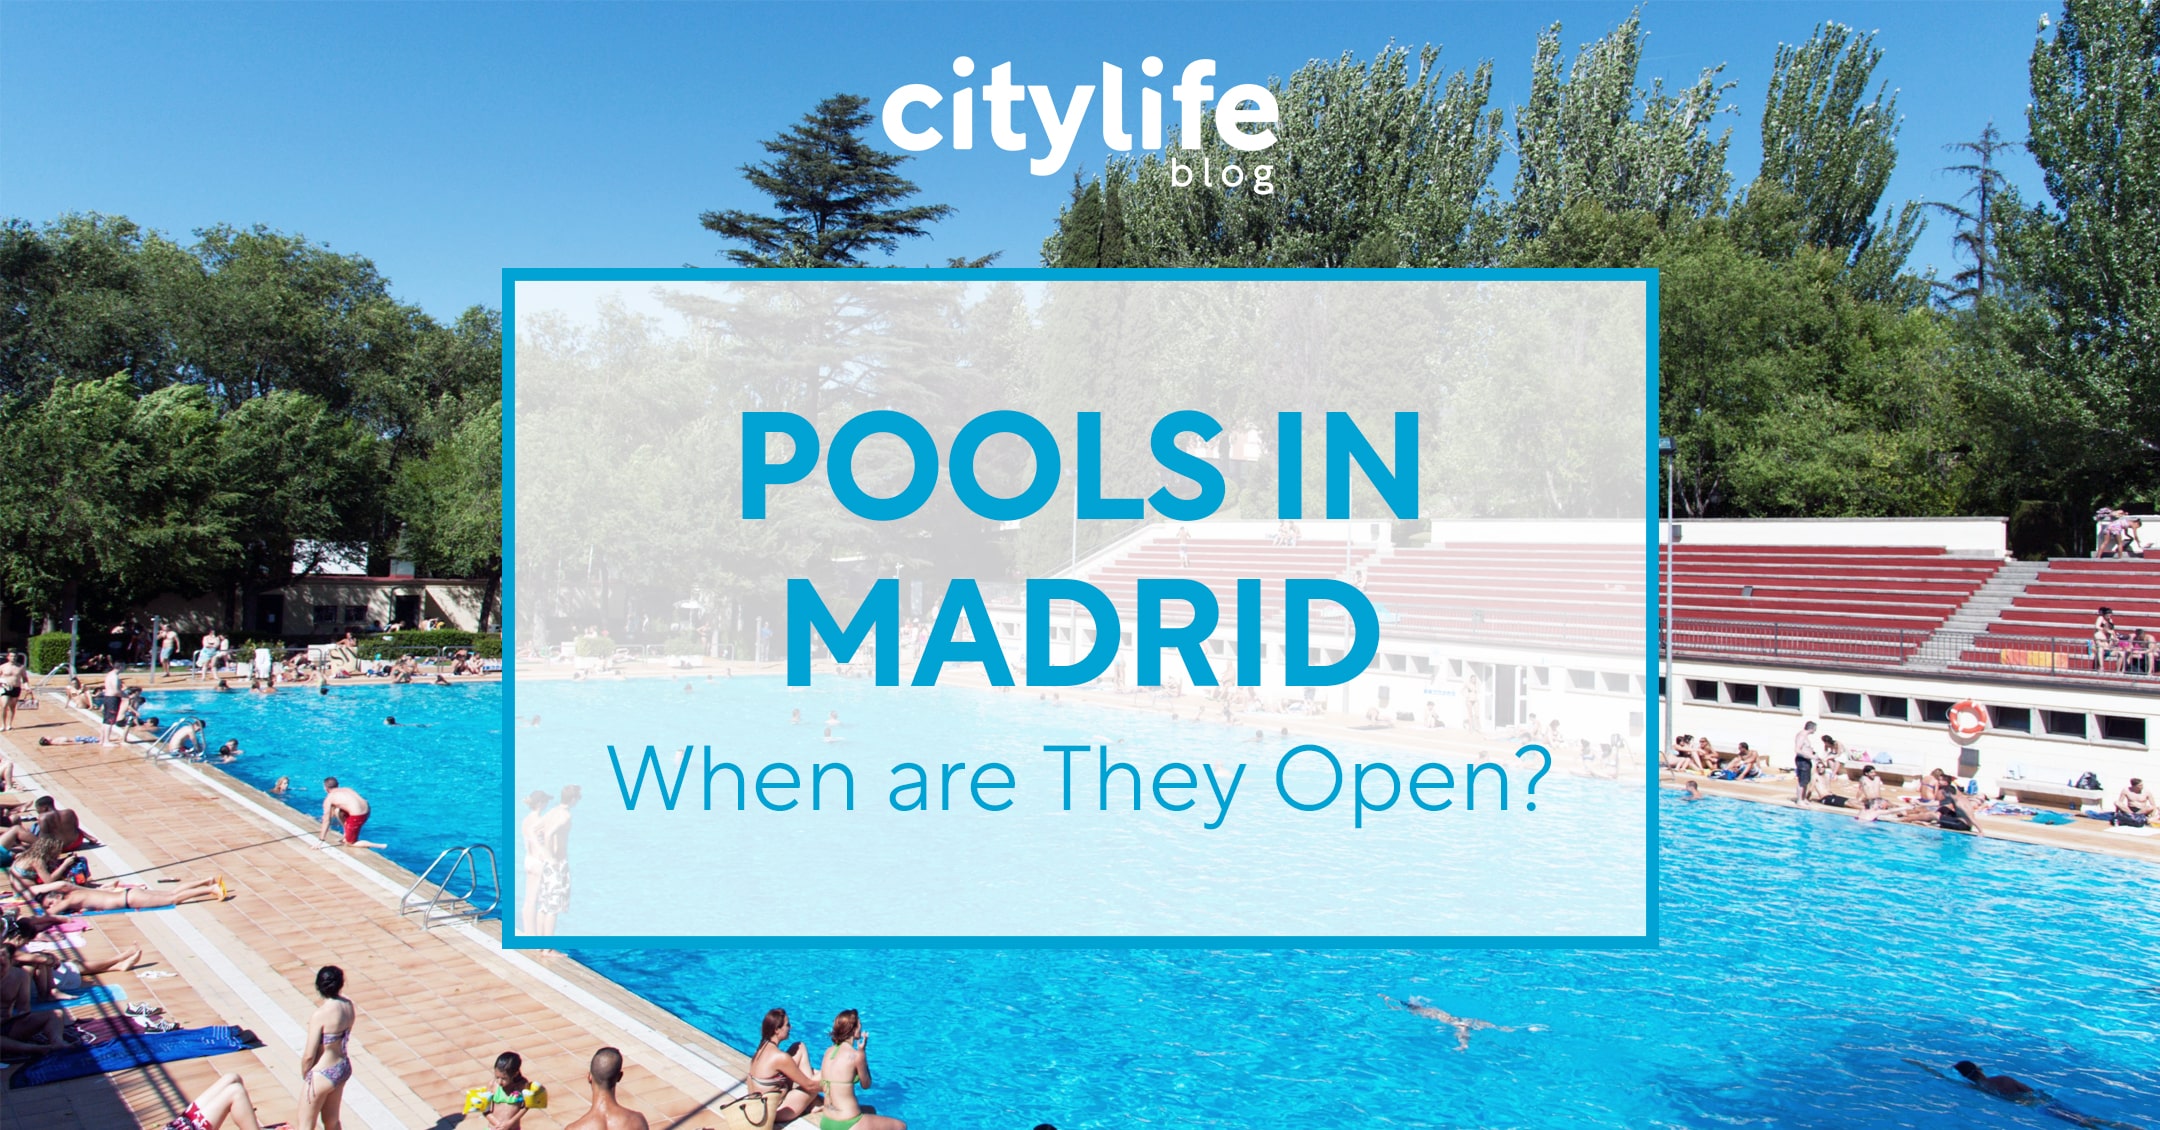 featured-image-opening-public-pools-citylife-madrid